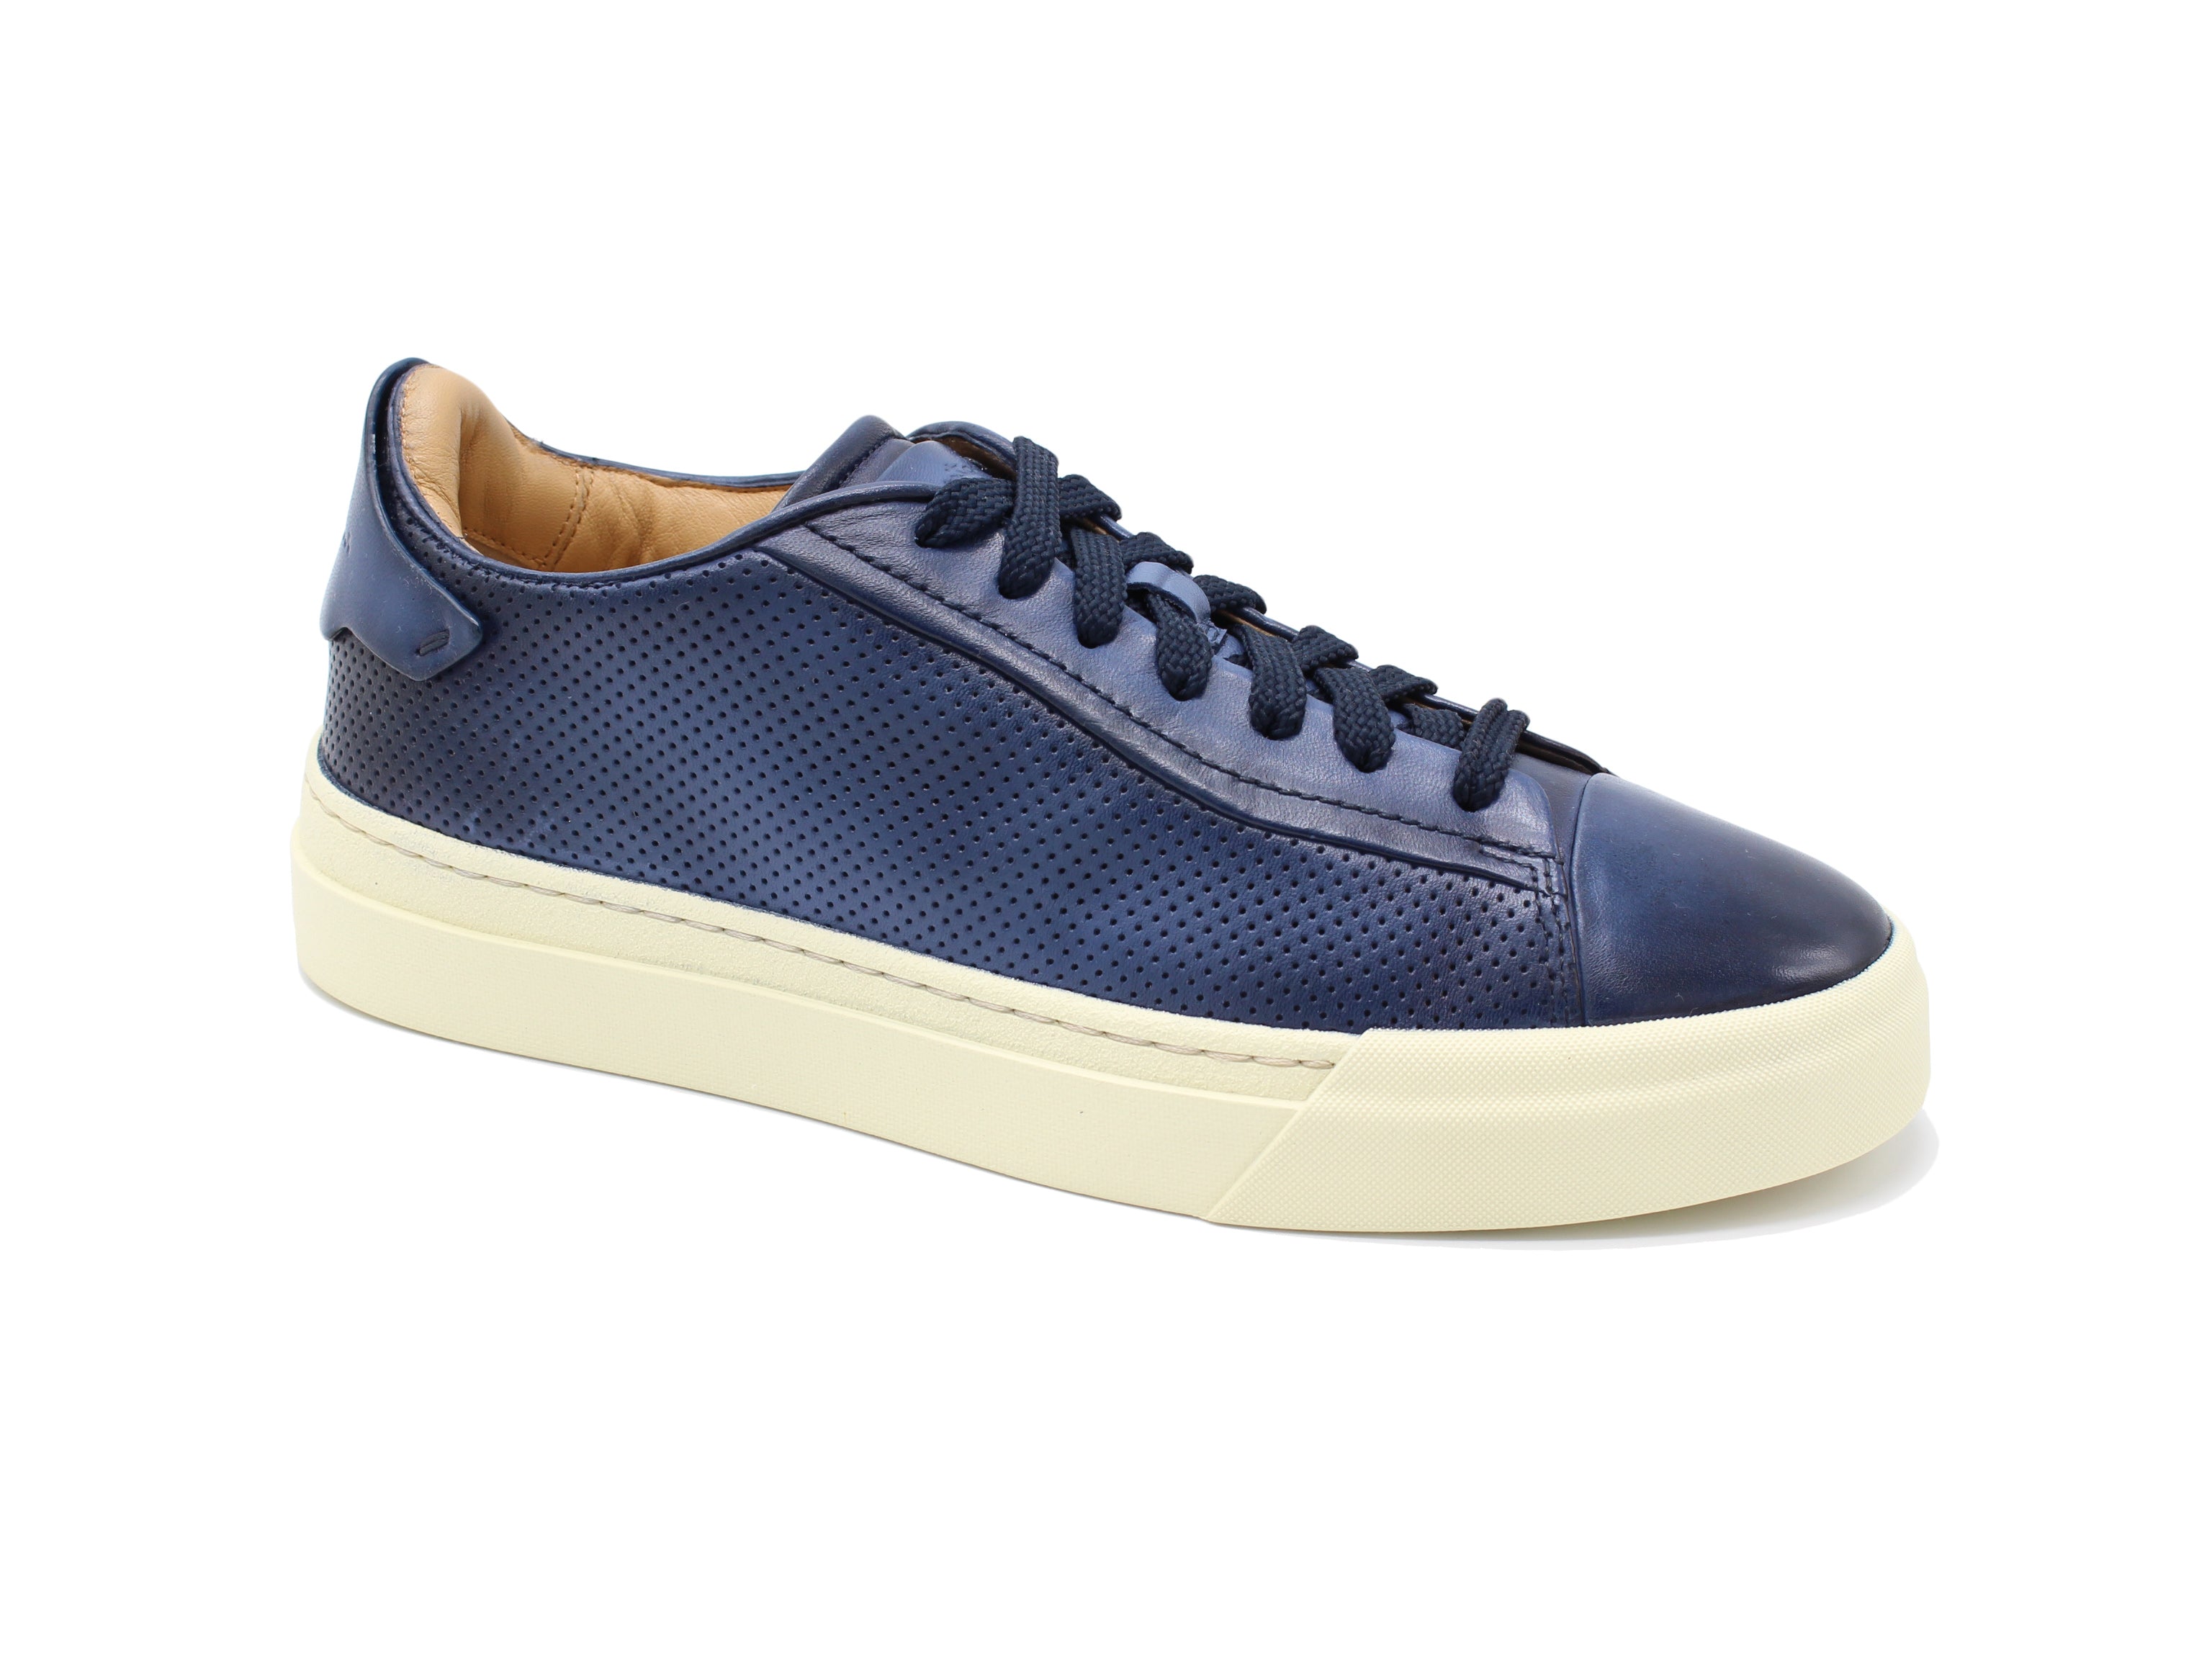 MBGT21651larfgou47 blue sneaker